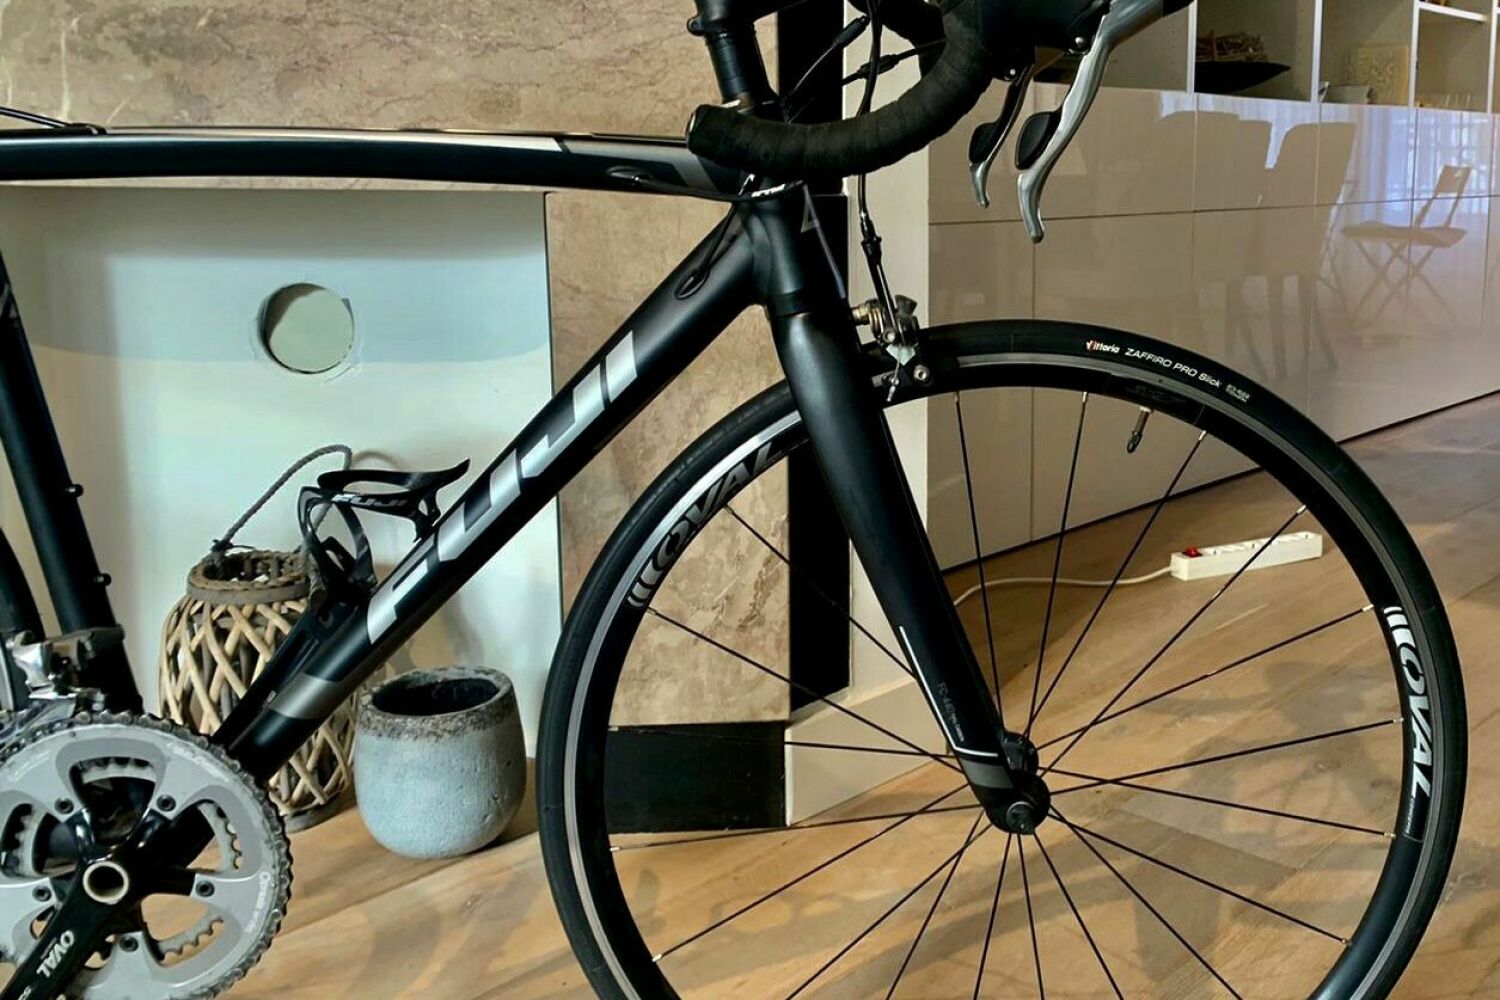 FUJI Race Bike (Fork Carbon Fiber)